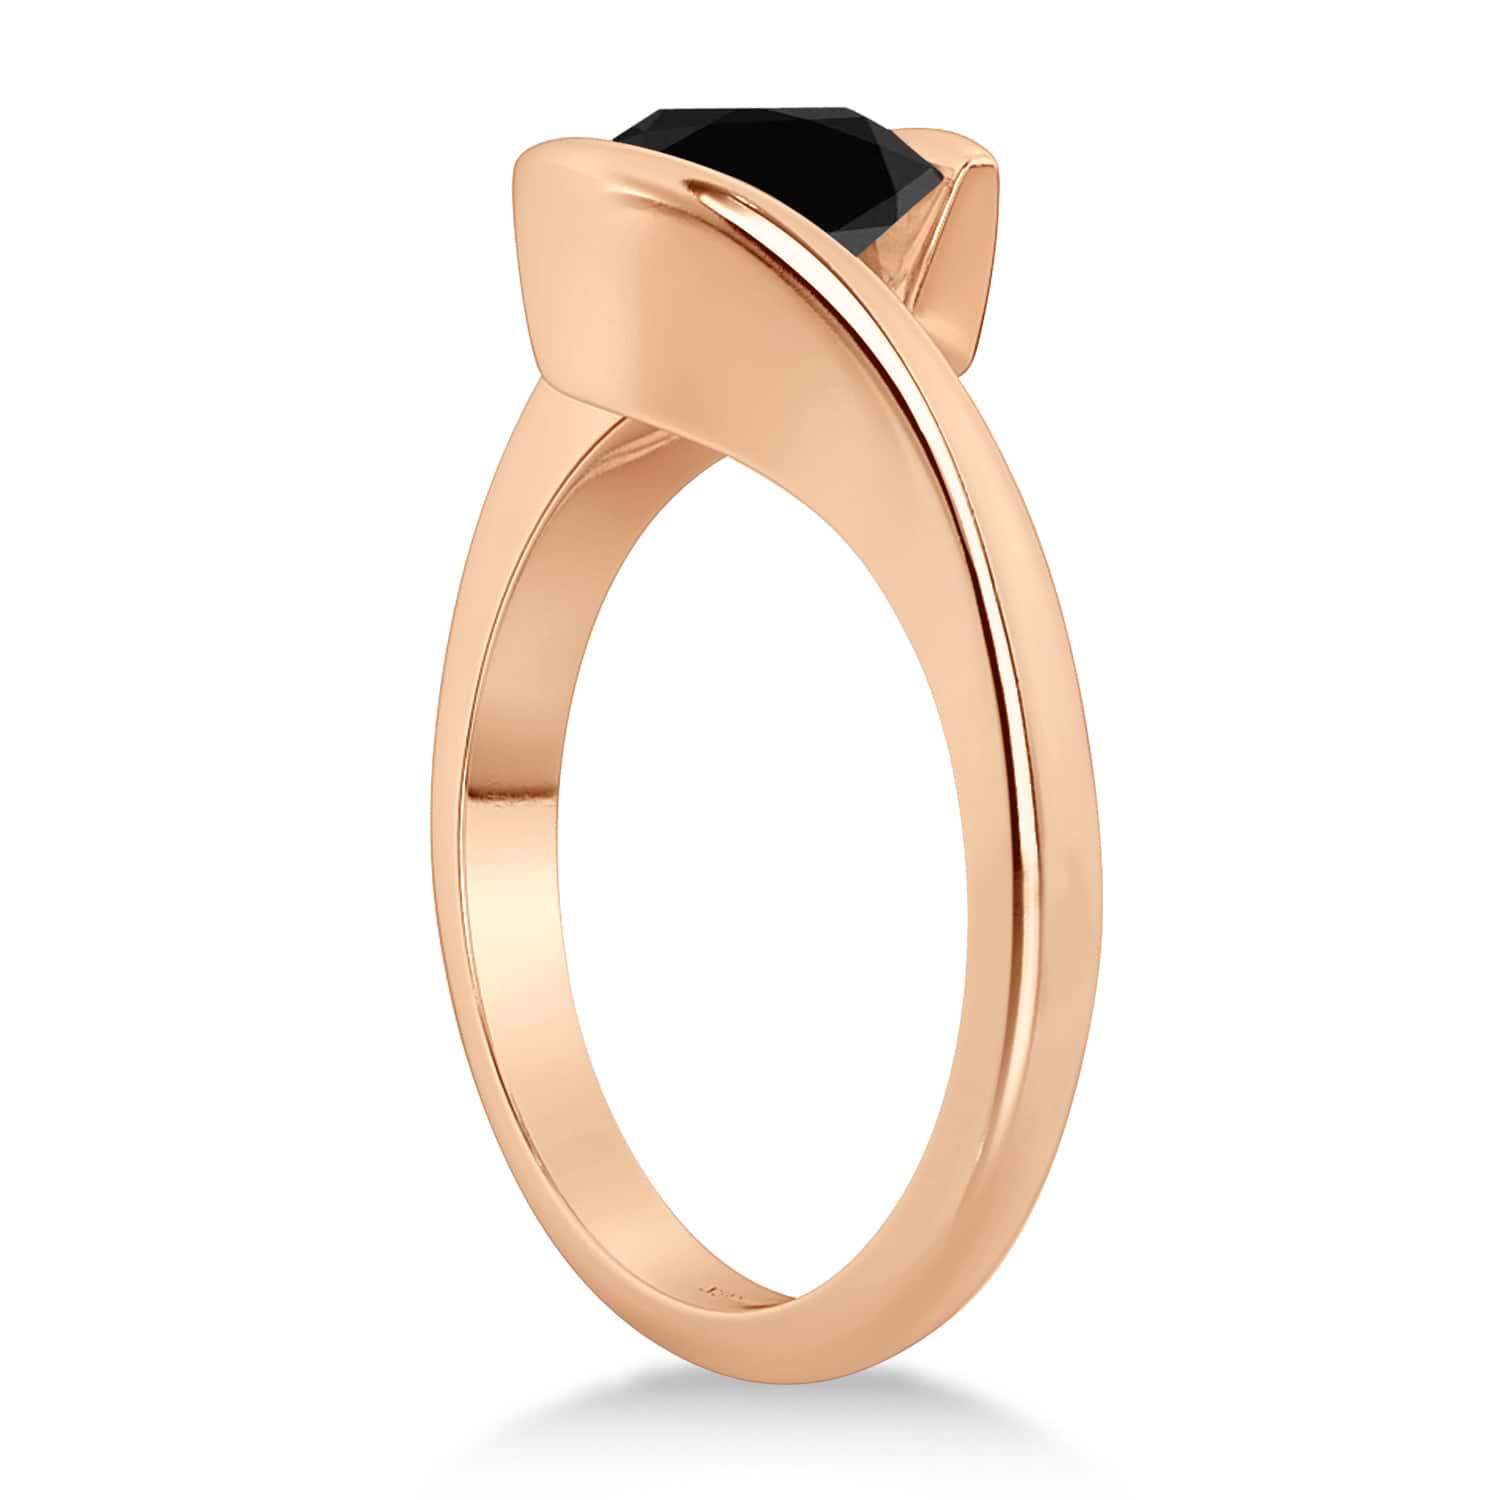 Tension Set Solitaire Black Diamond Engagement Ring 14k Rose Gold 1.50ct